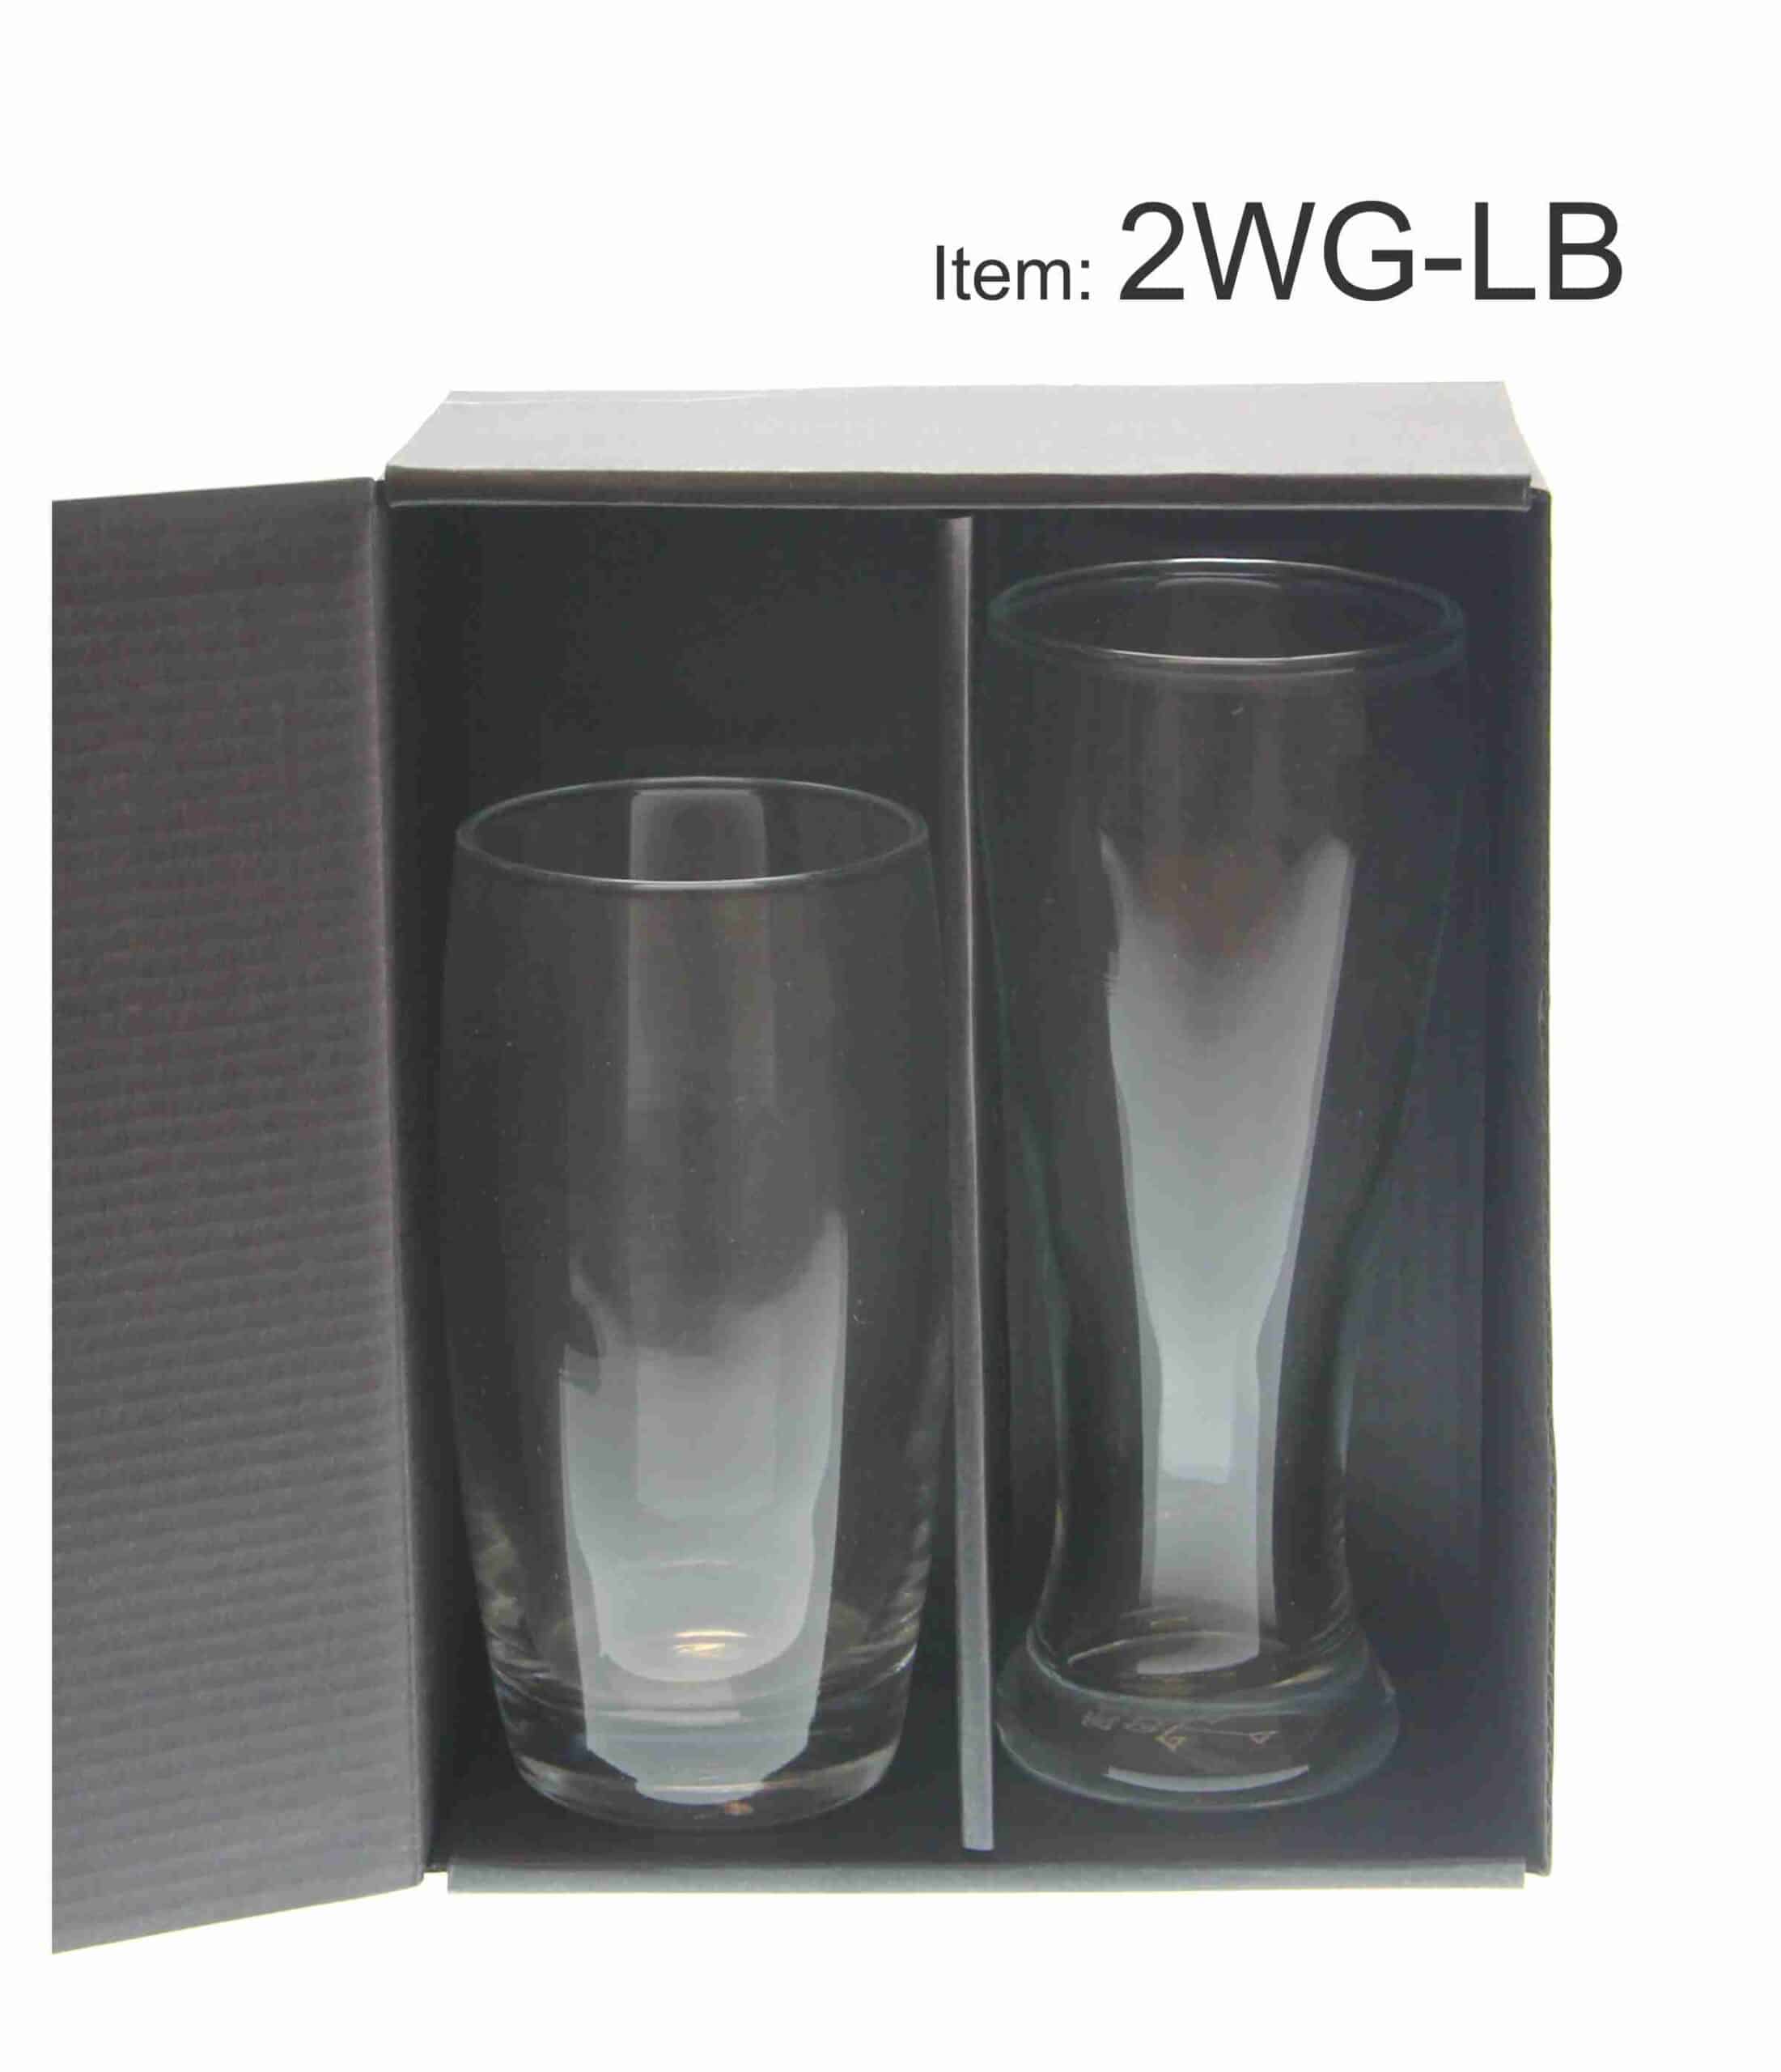 2WG LB beer tumbler highball glass packaging black presentation gift box abc2000 melbourne australia scaled